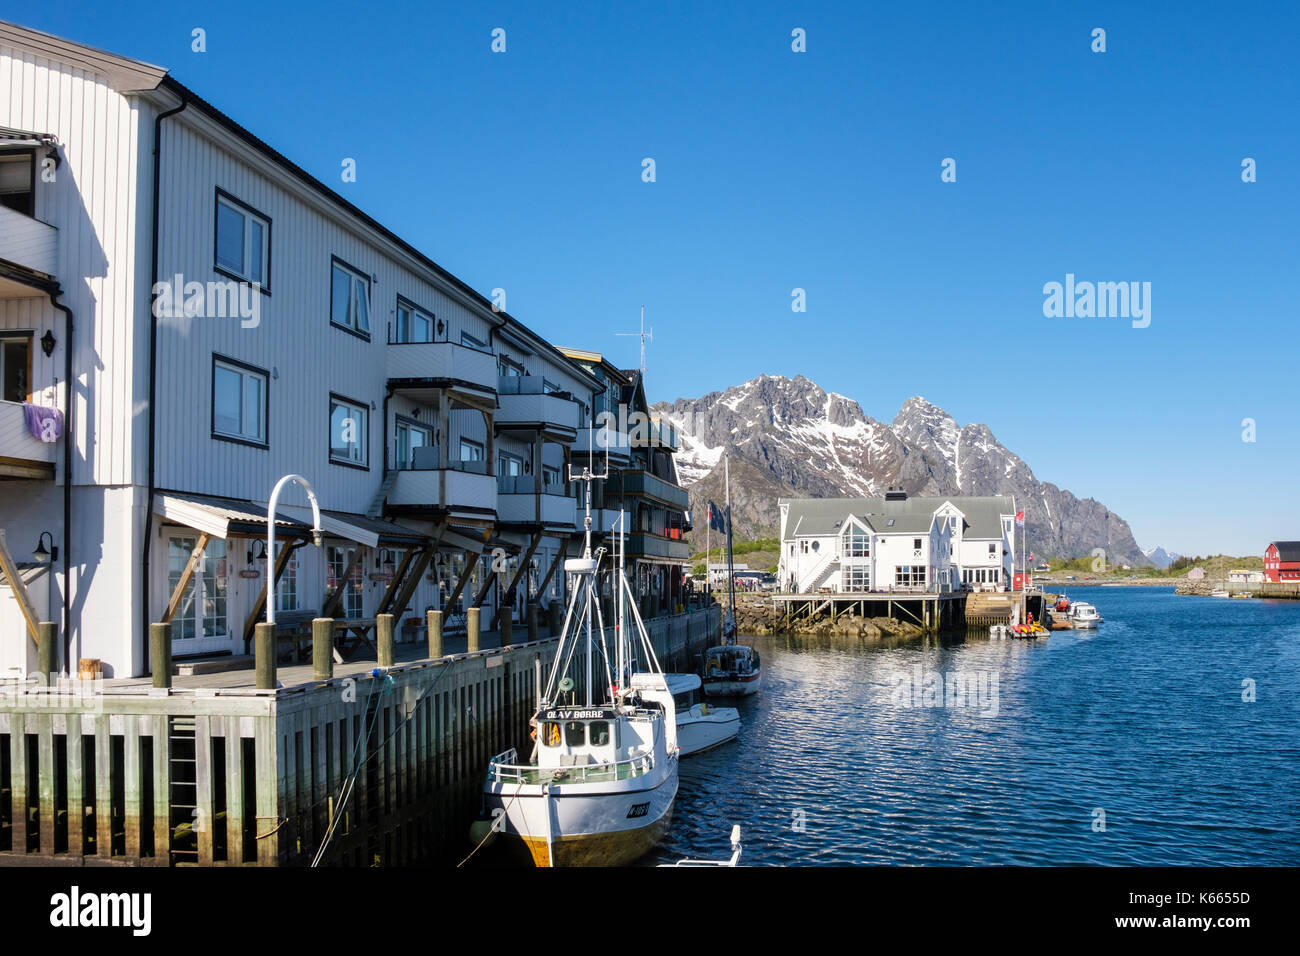 Dans les bâtiments du port, village de pêcheurs de Henningsvær, Austvågøya Island, îles Lofoten, Nordland, Norvège, Scandinavie, Europe Banque D'Images